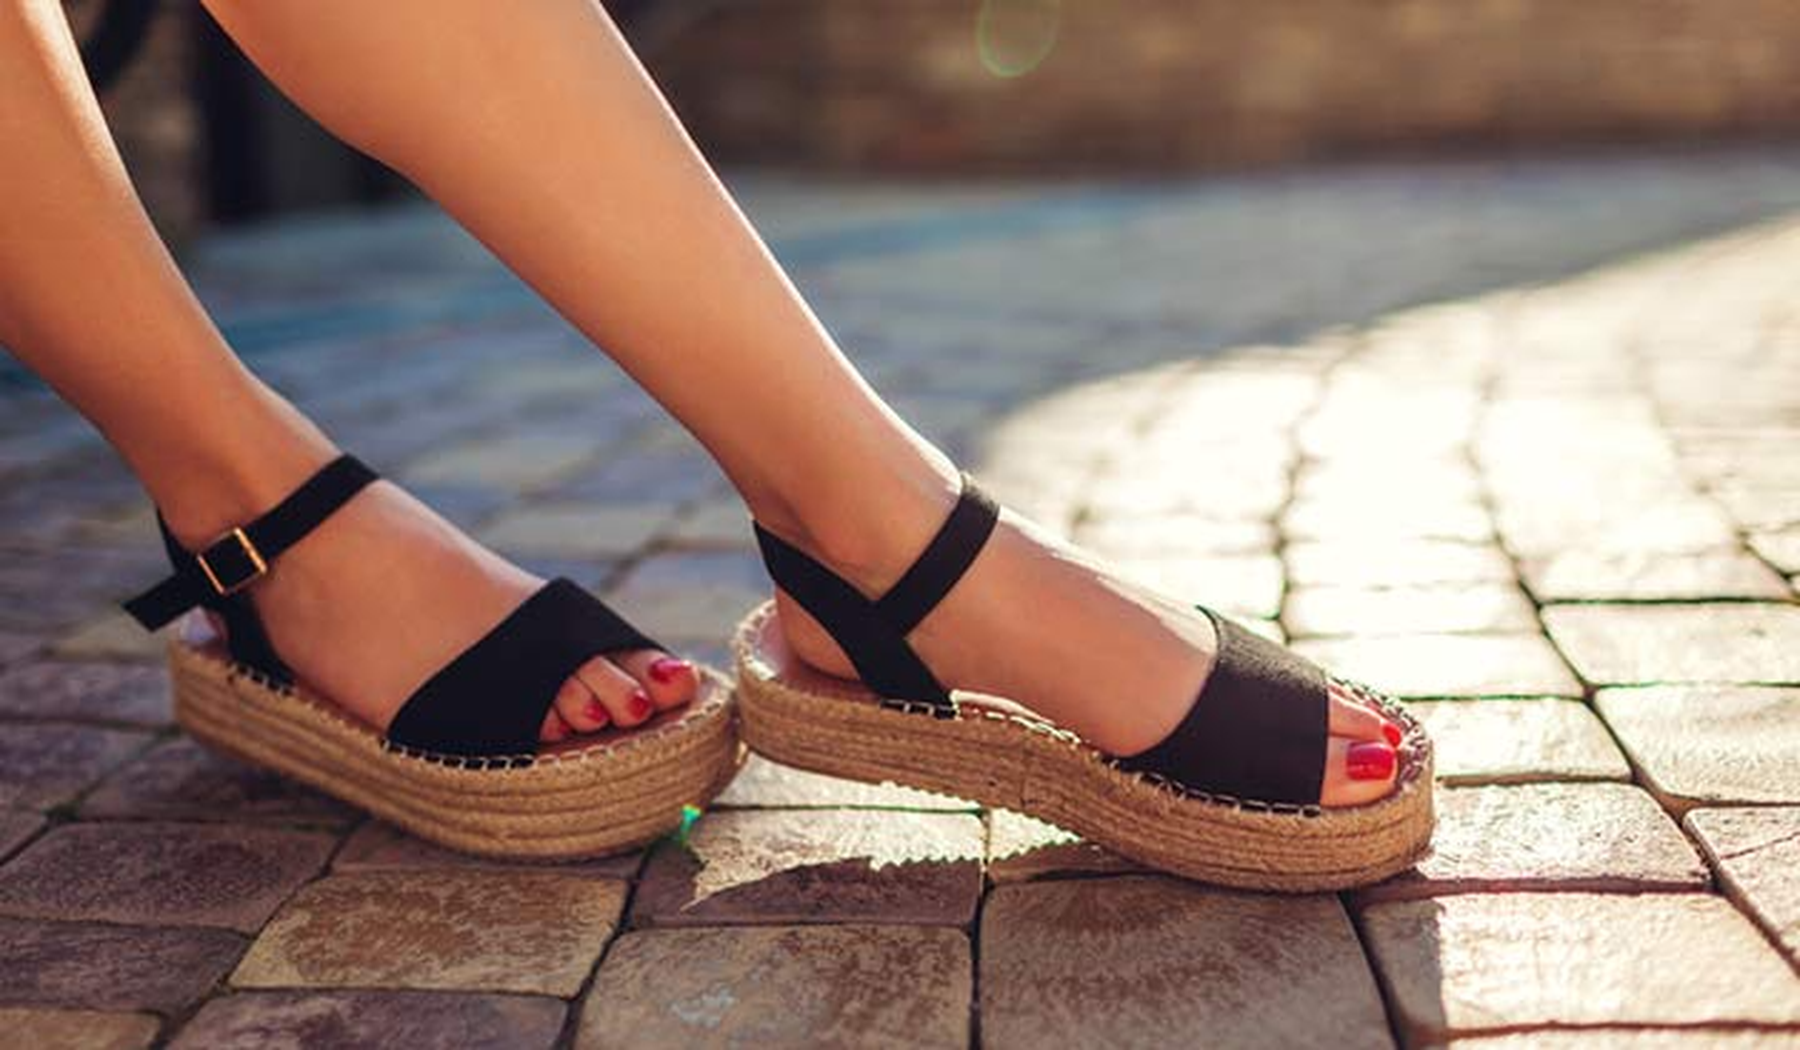 Woman wearing black platform sandals